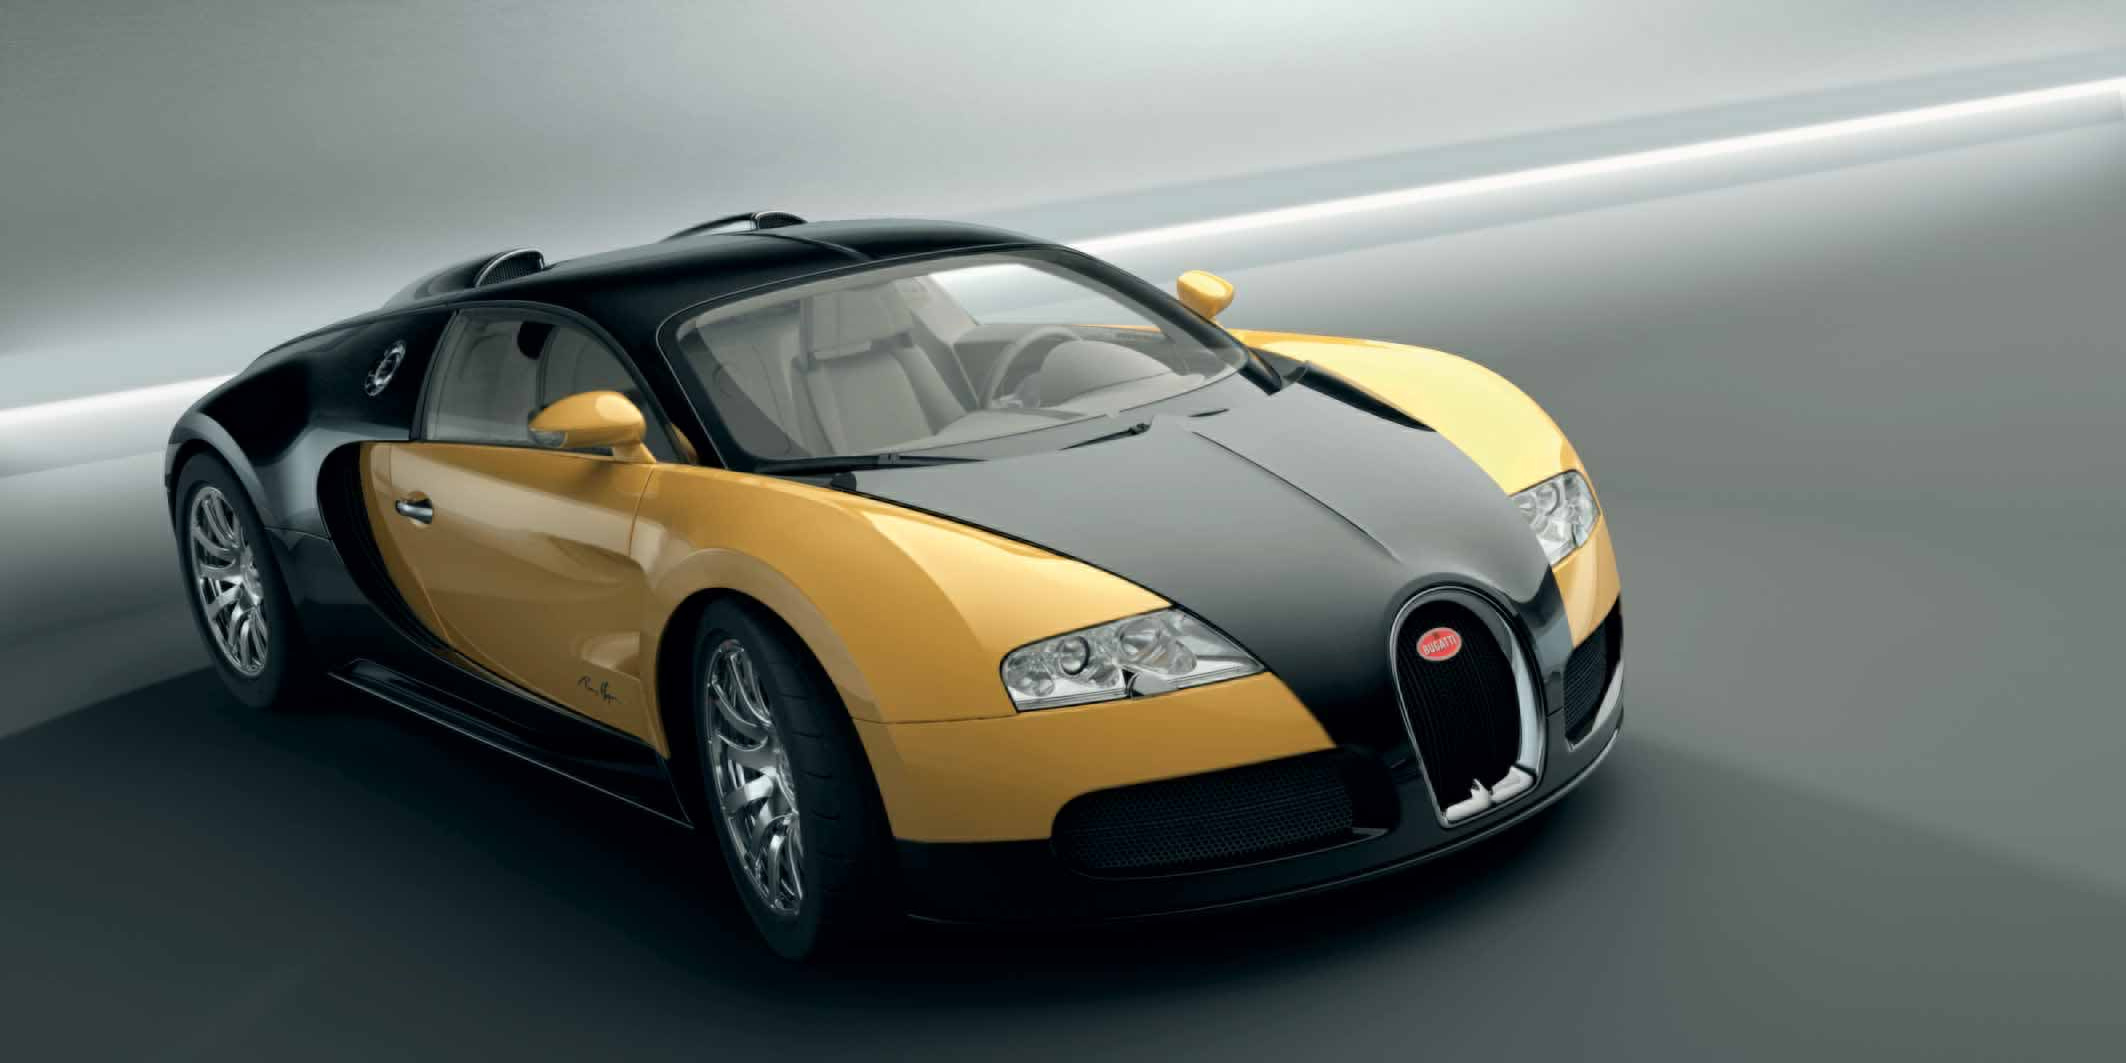 Black Bugatti Veyron Wallpaper Pictures HD